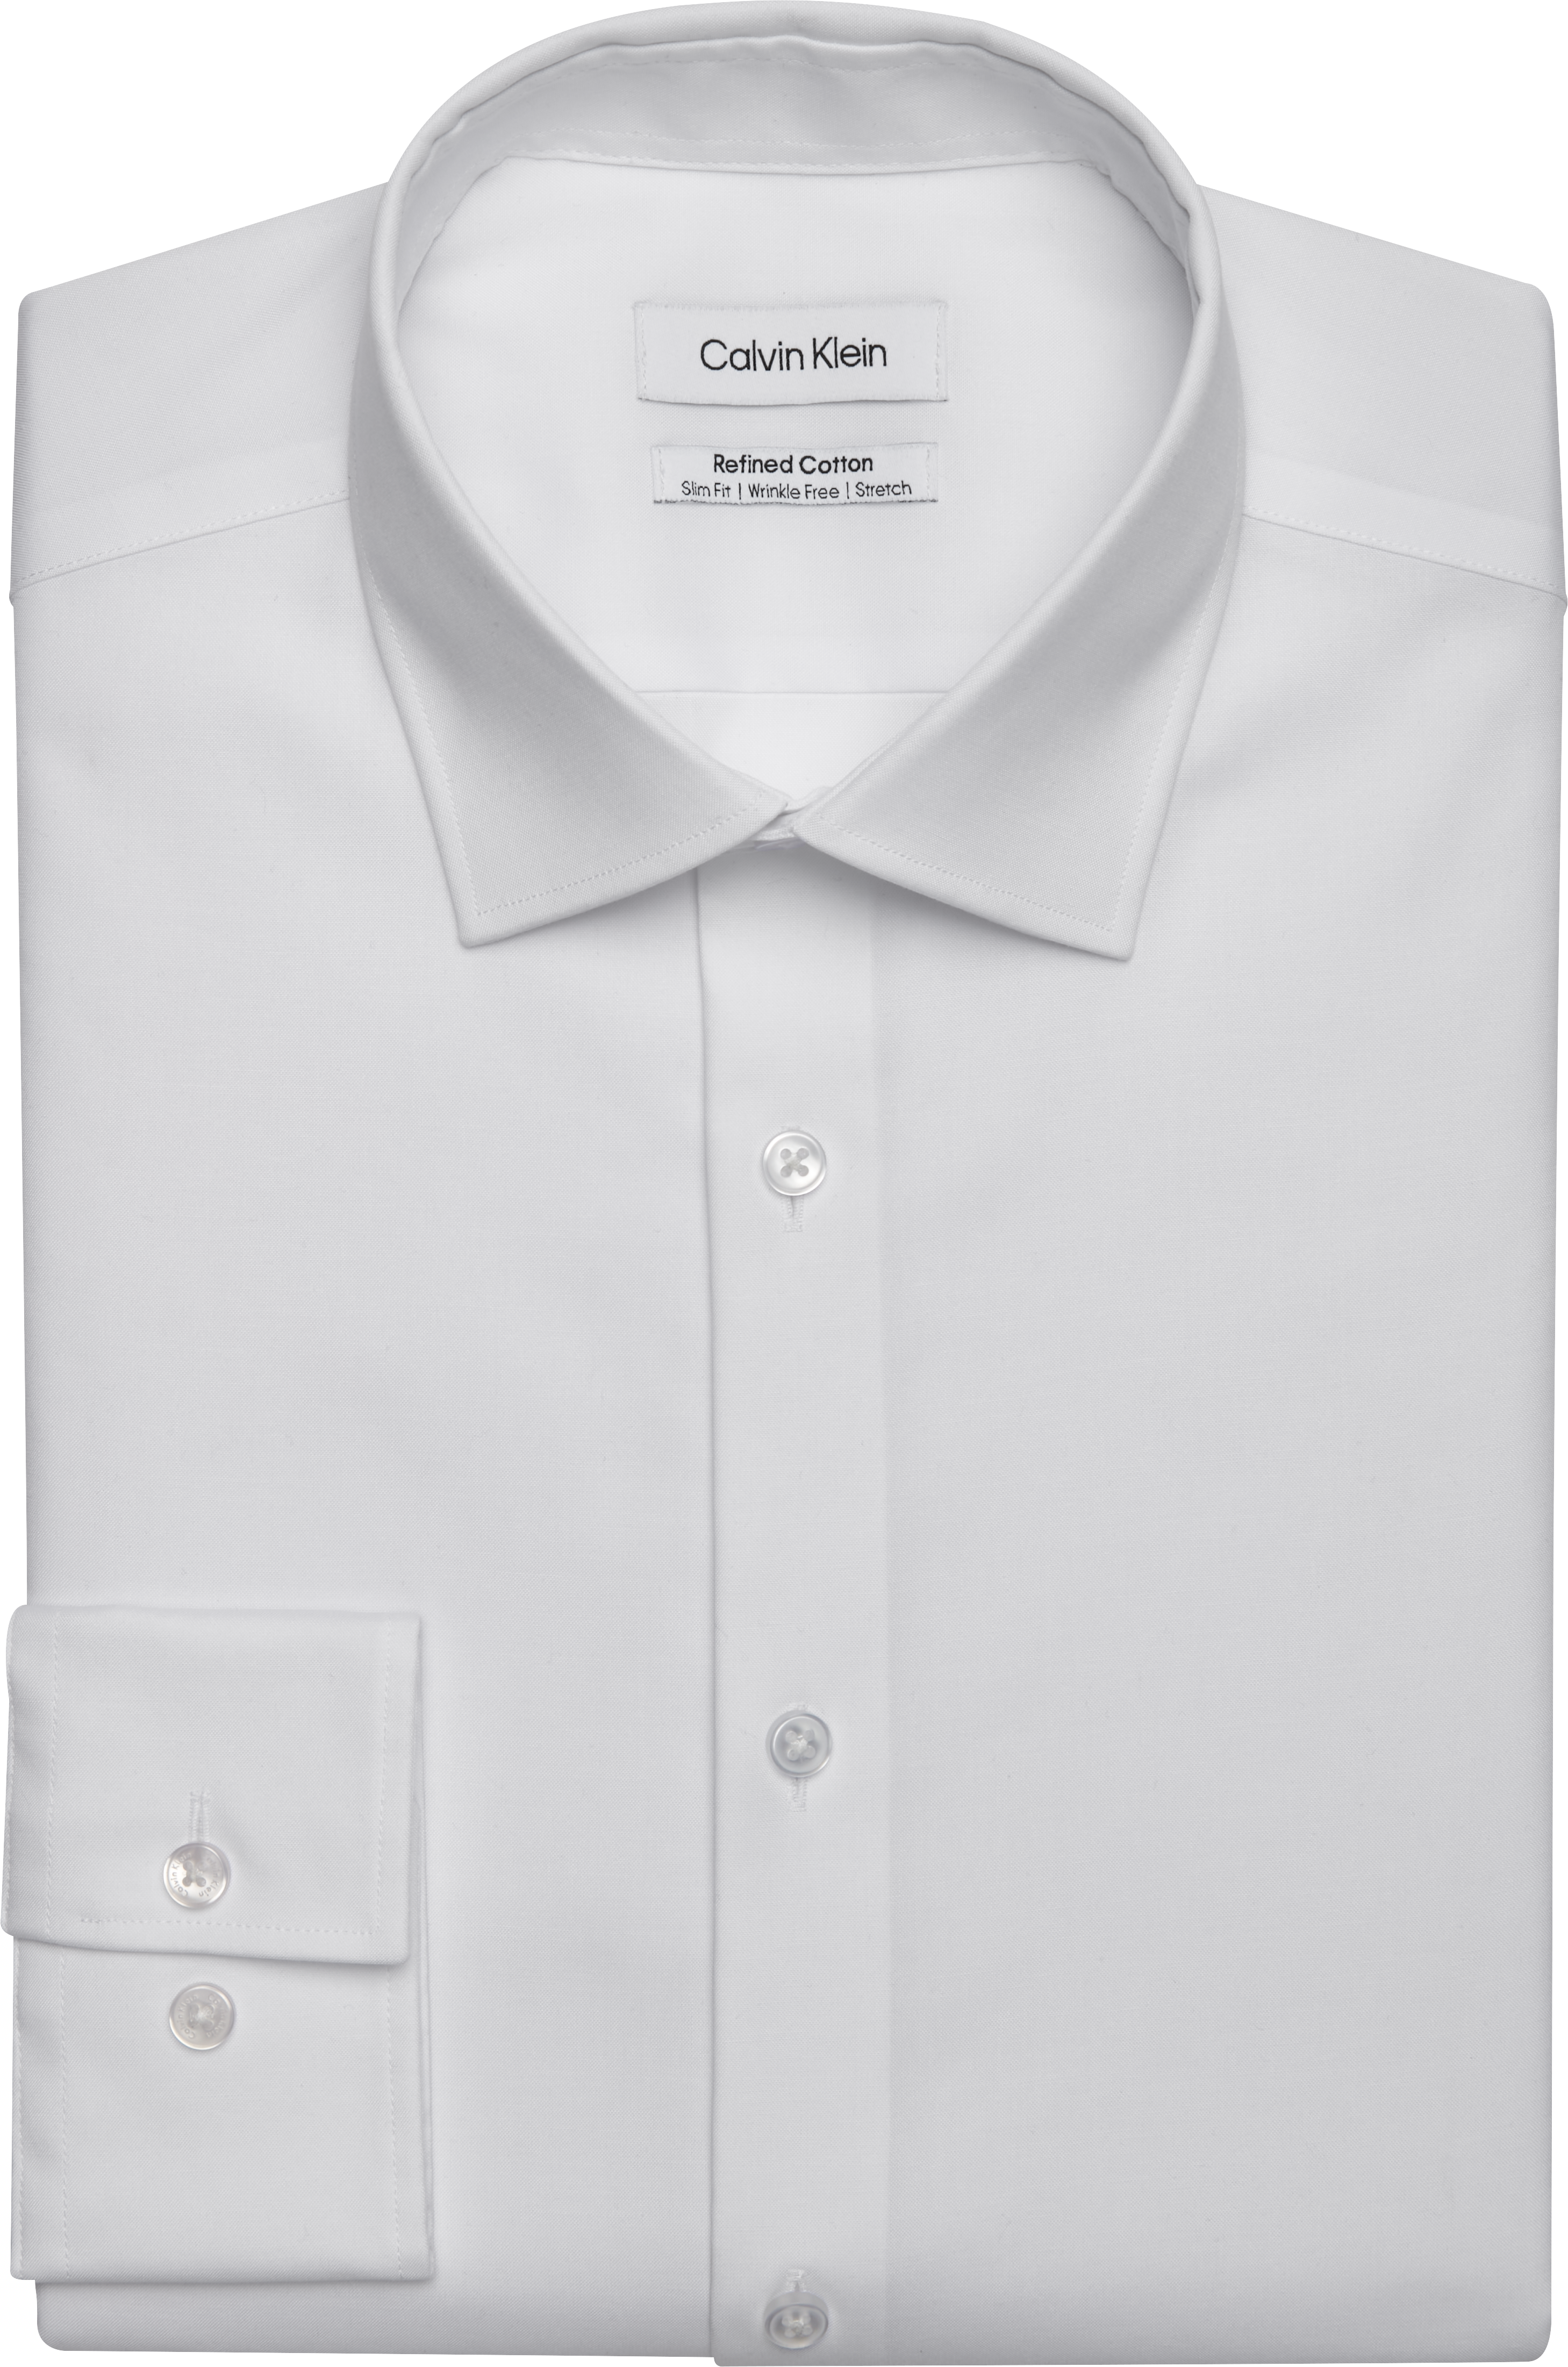 Calvin Klein Slim Fit Spread Collar Dress Shirt, White - Men's Shirts |  Men's Wearhouse